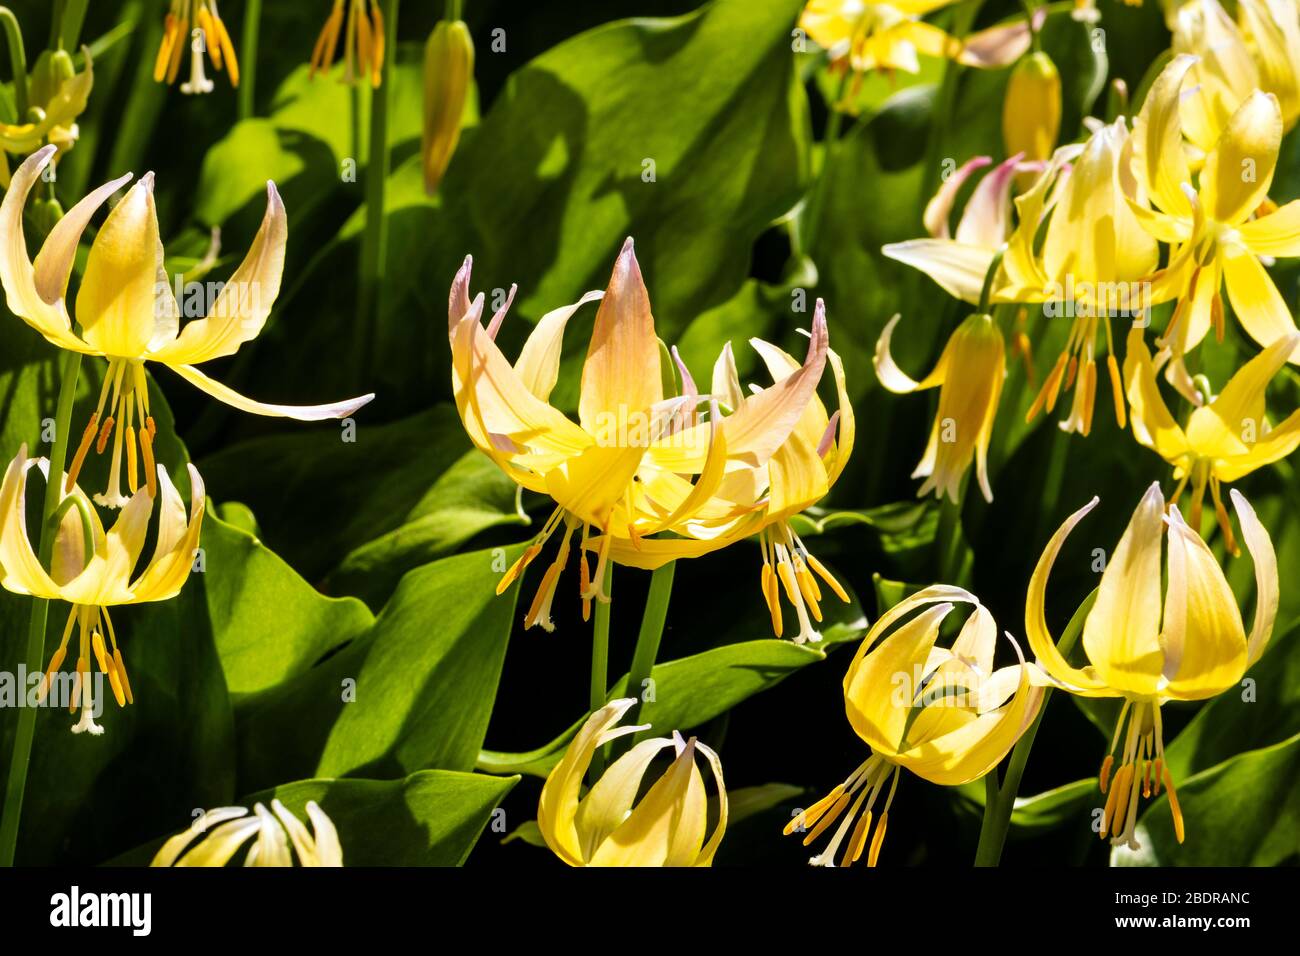 Erythronium Joanna flowers. Trout lily garden hybrid cultivar, UK. Stock Photo